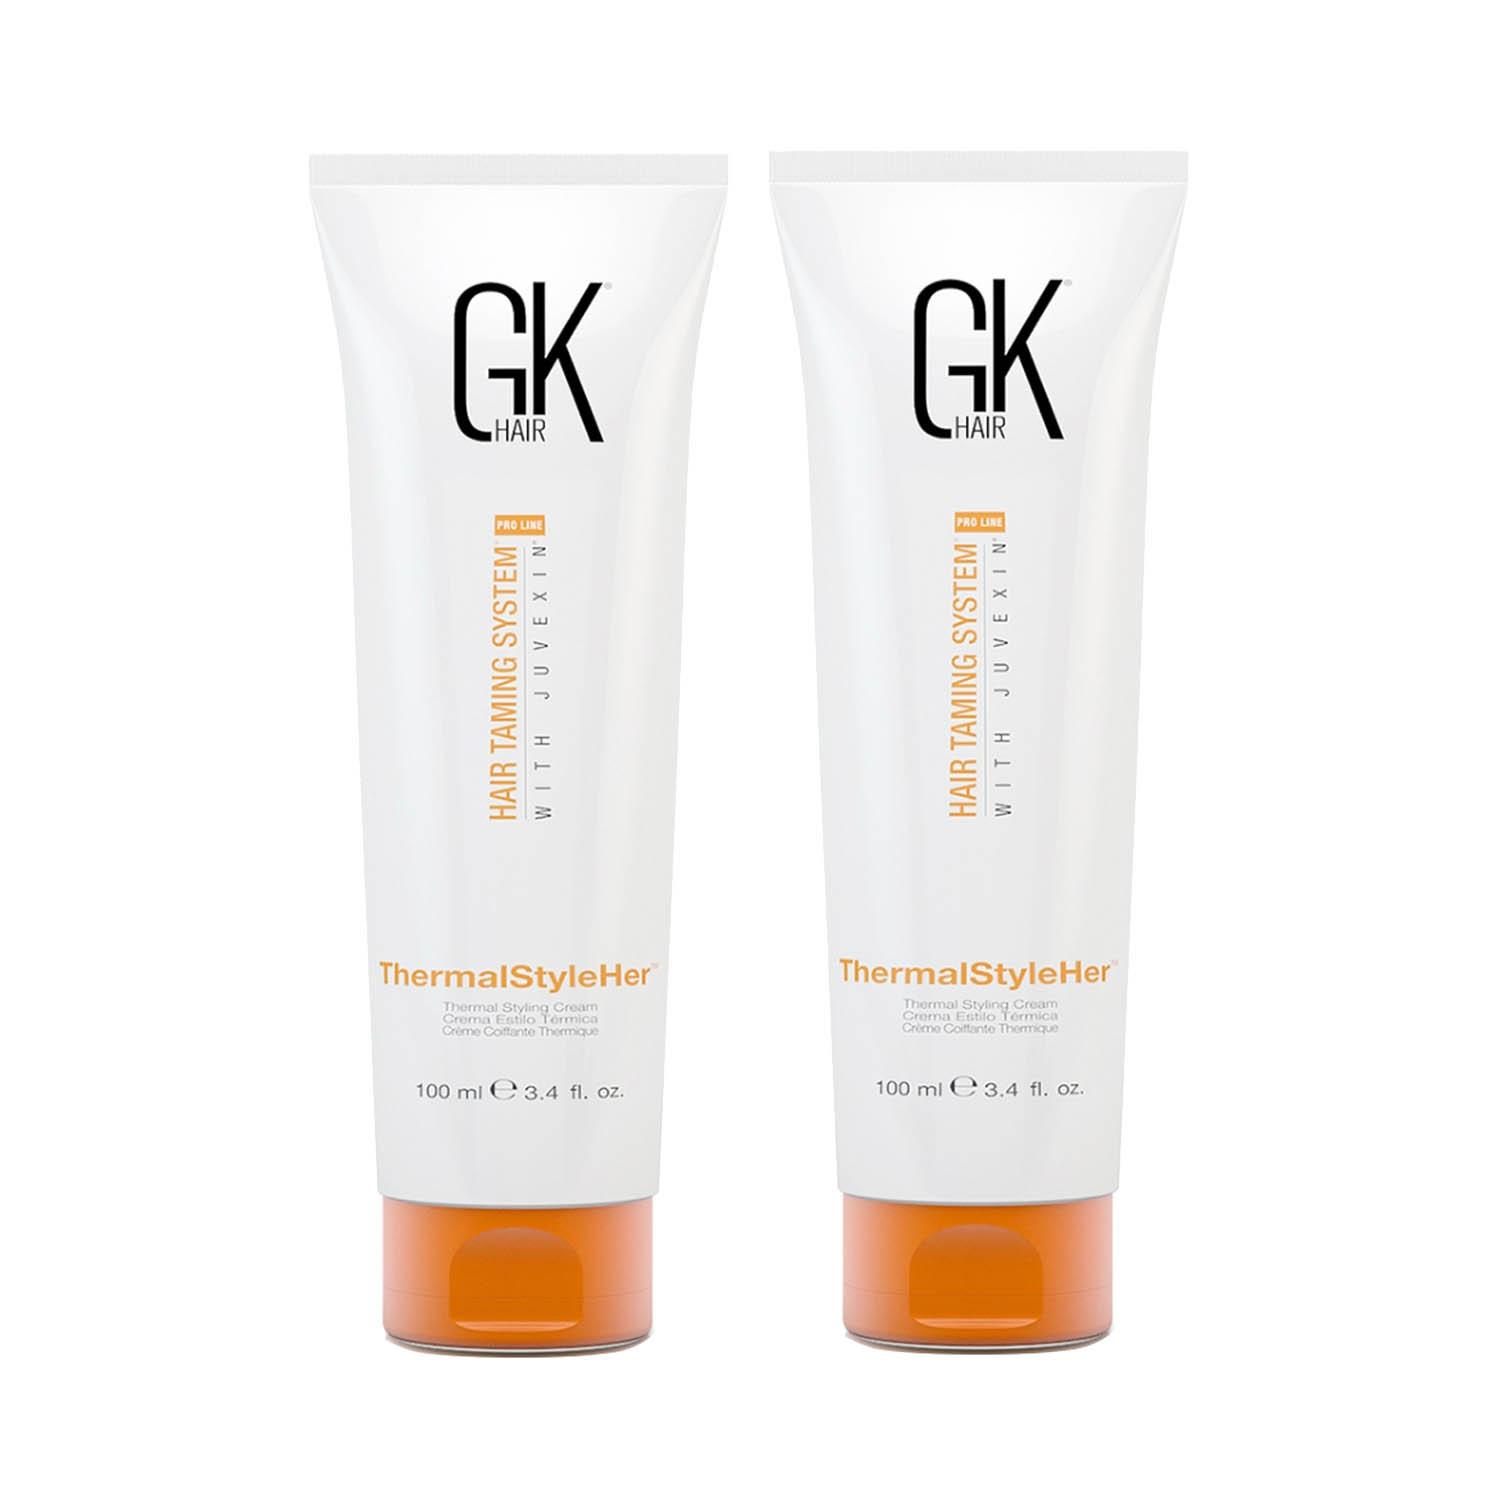 GK Hair | GK Hair Thermal Style Her 100ml - Pack of 2